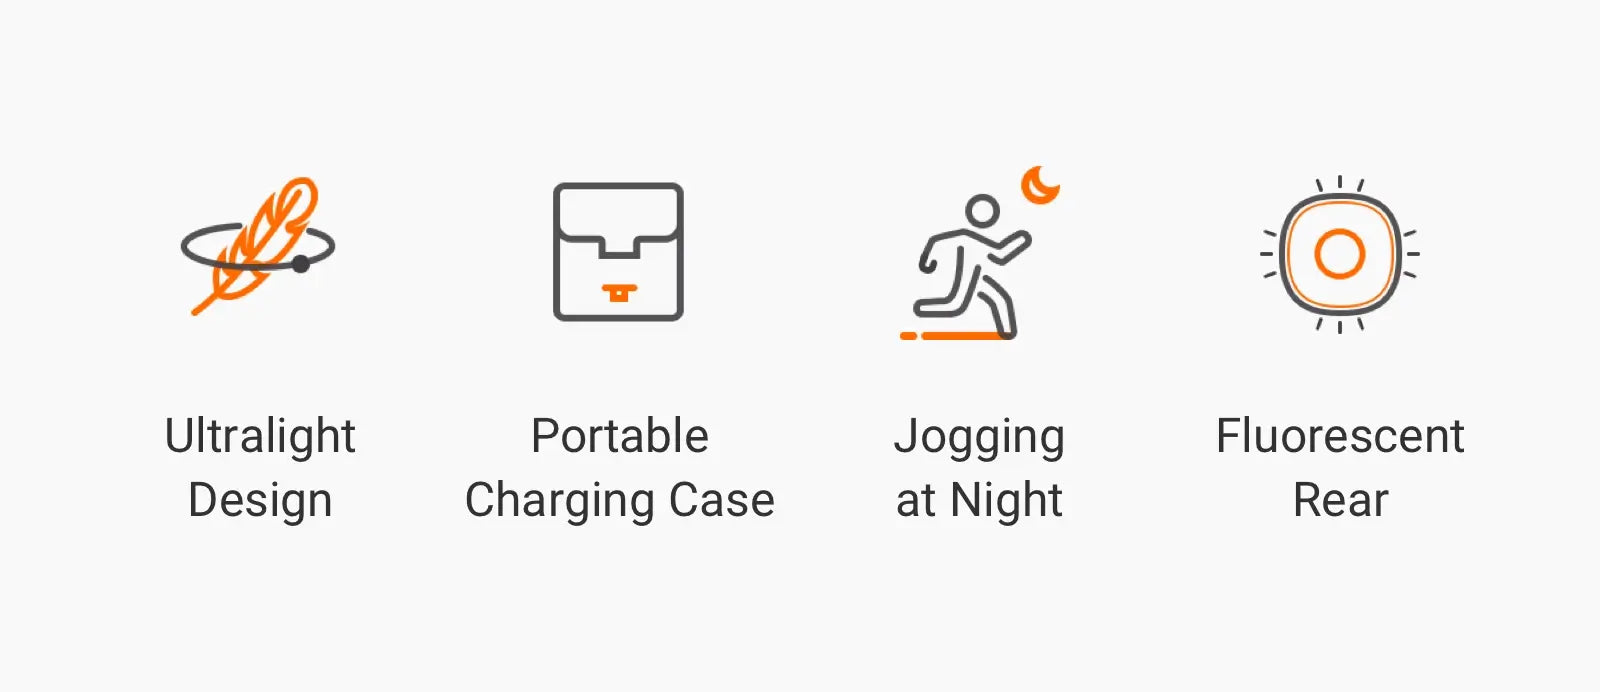 Ultralight Design Portable Charging Case Jogging at Night Fluorescent Rear